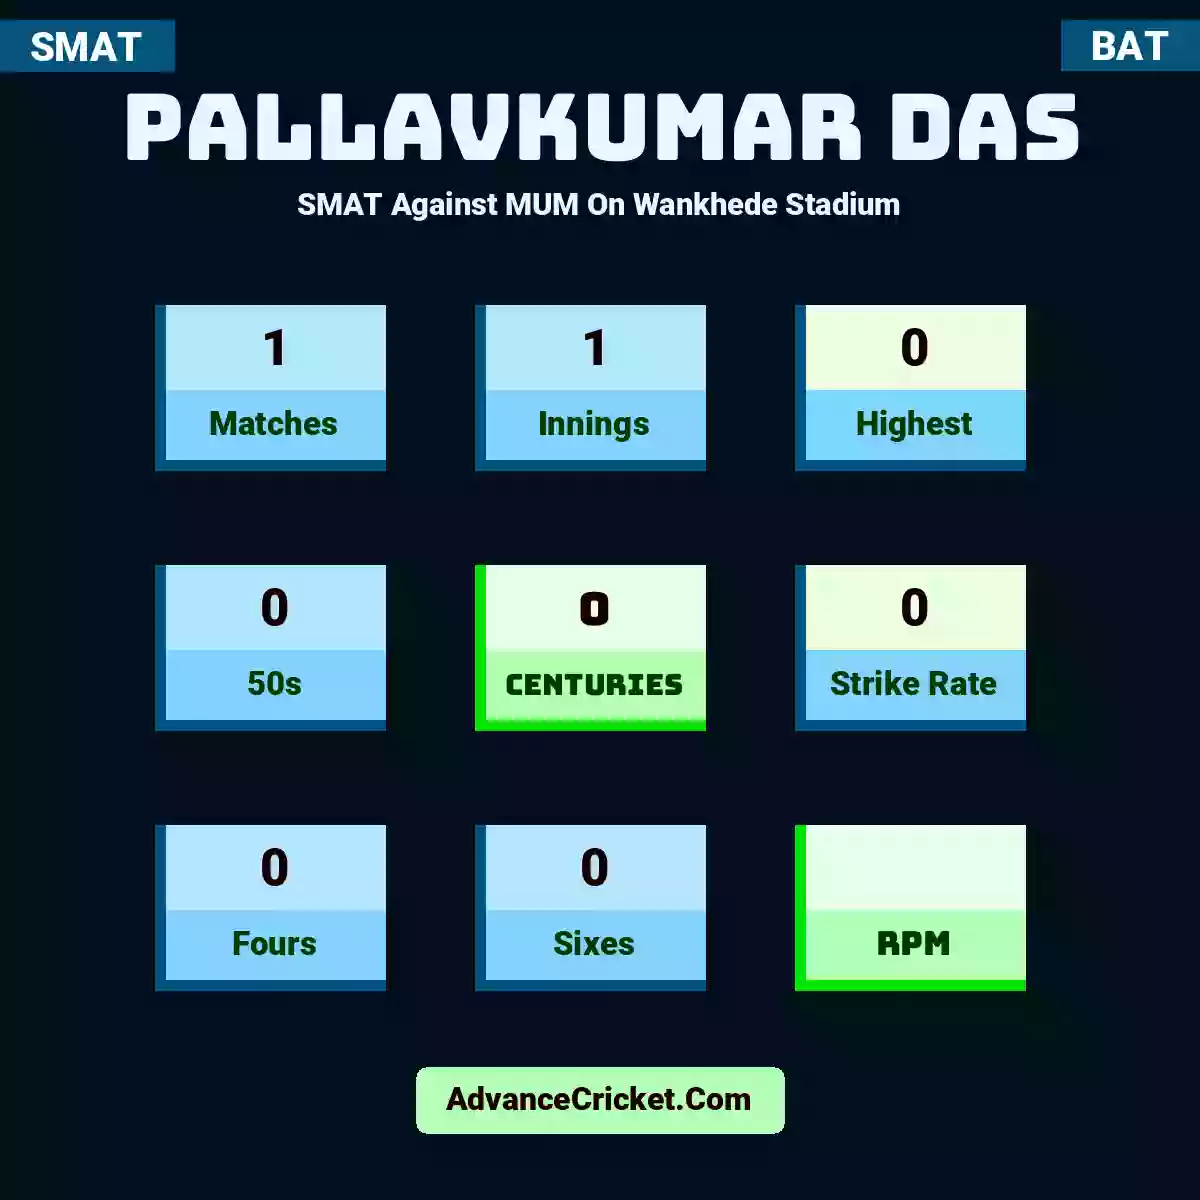 Pallavkumar Das SMAT  Against MUM On Wankhede Stadium, Pallavkumar Das played 1 matches, scored 0 runs as highest, 0 half-centuries, and 0 centuries, with a strike rate of 0. P.Das hit 0 fours and 0 sixes.